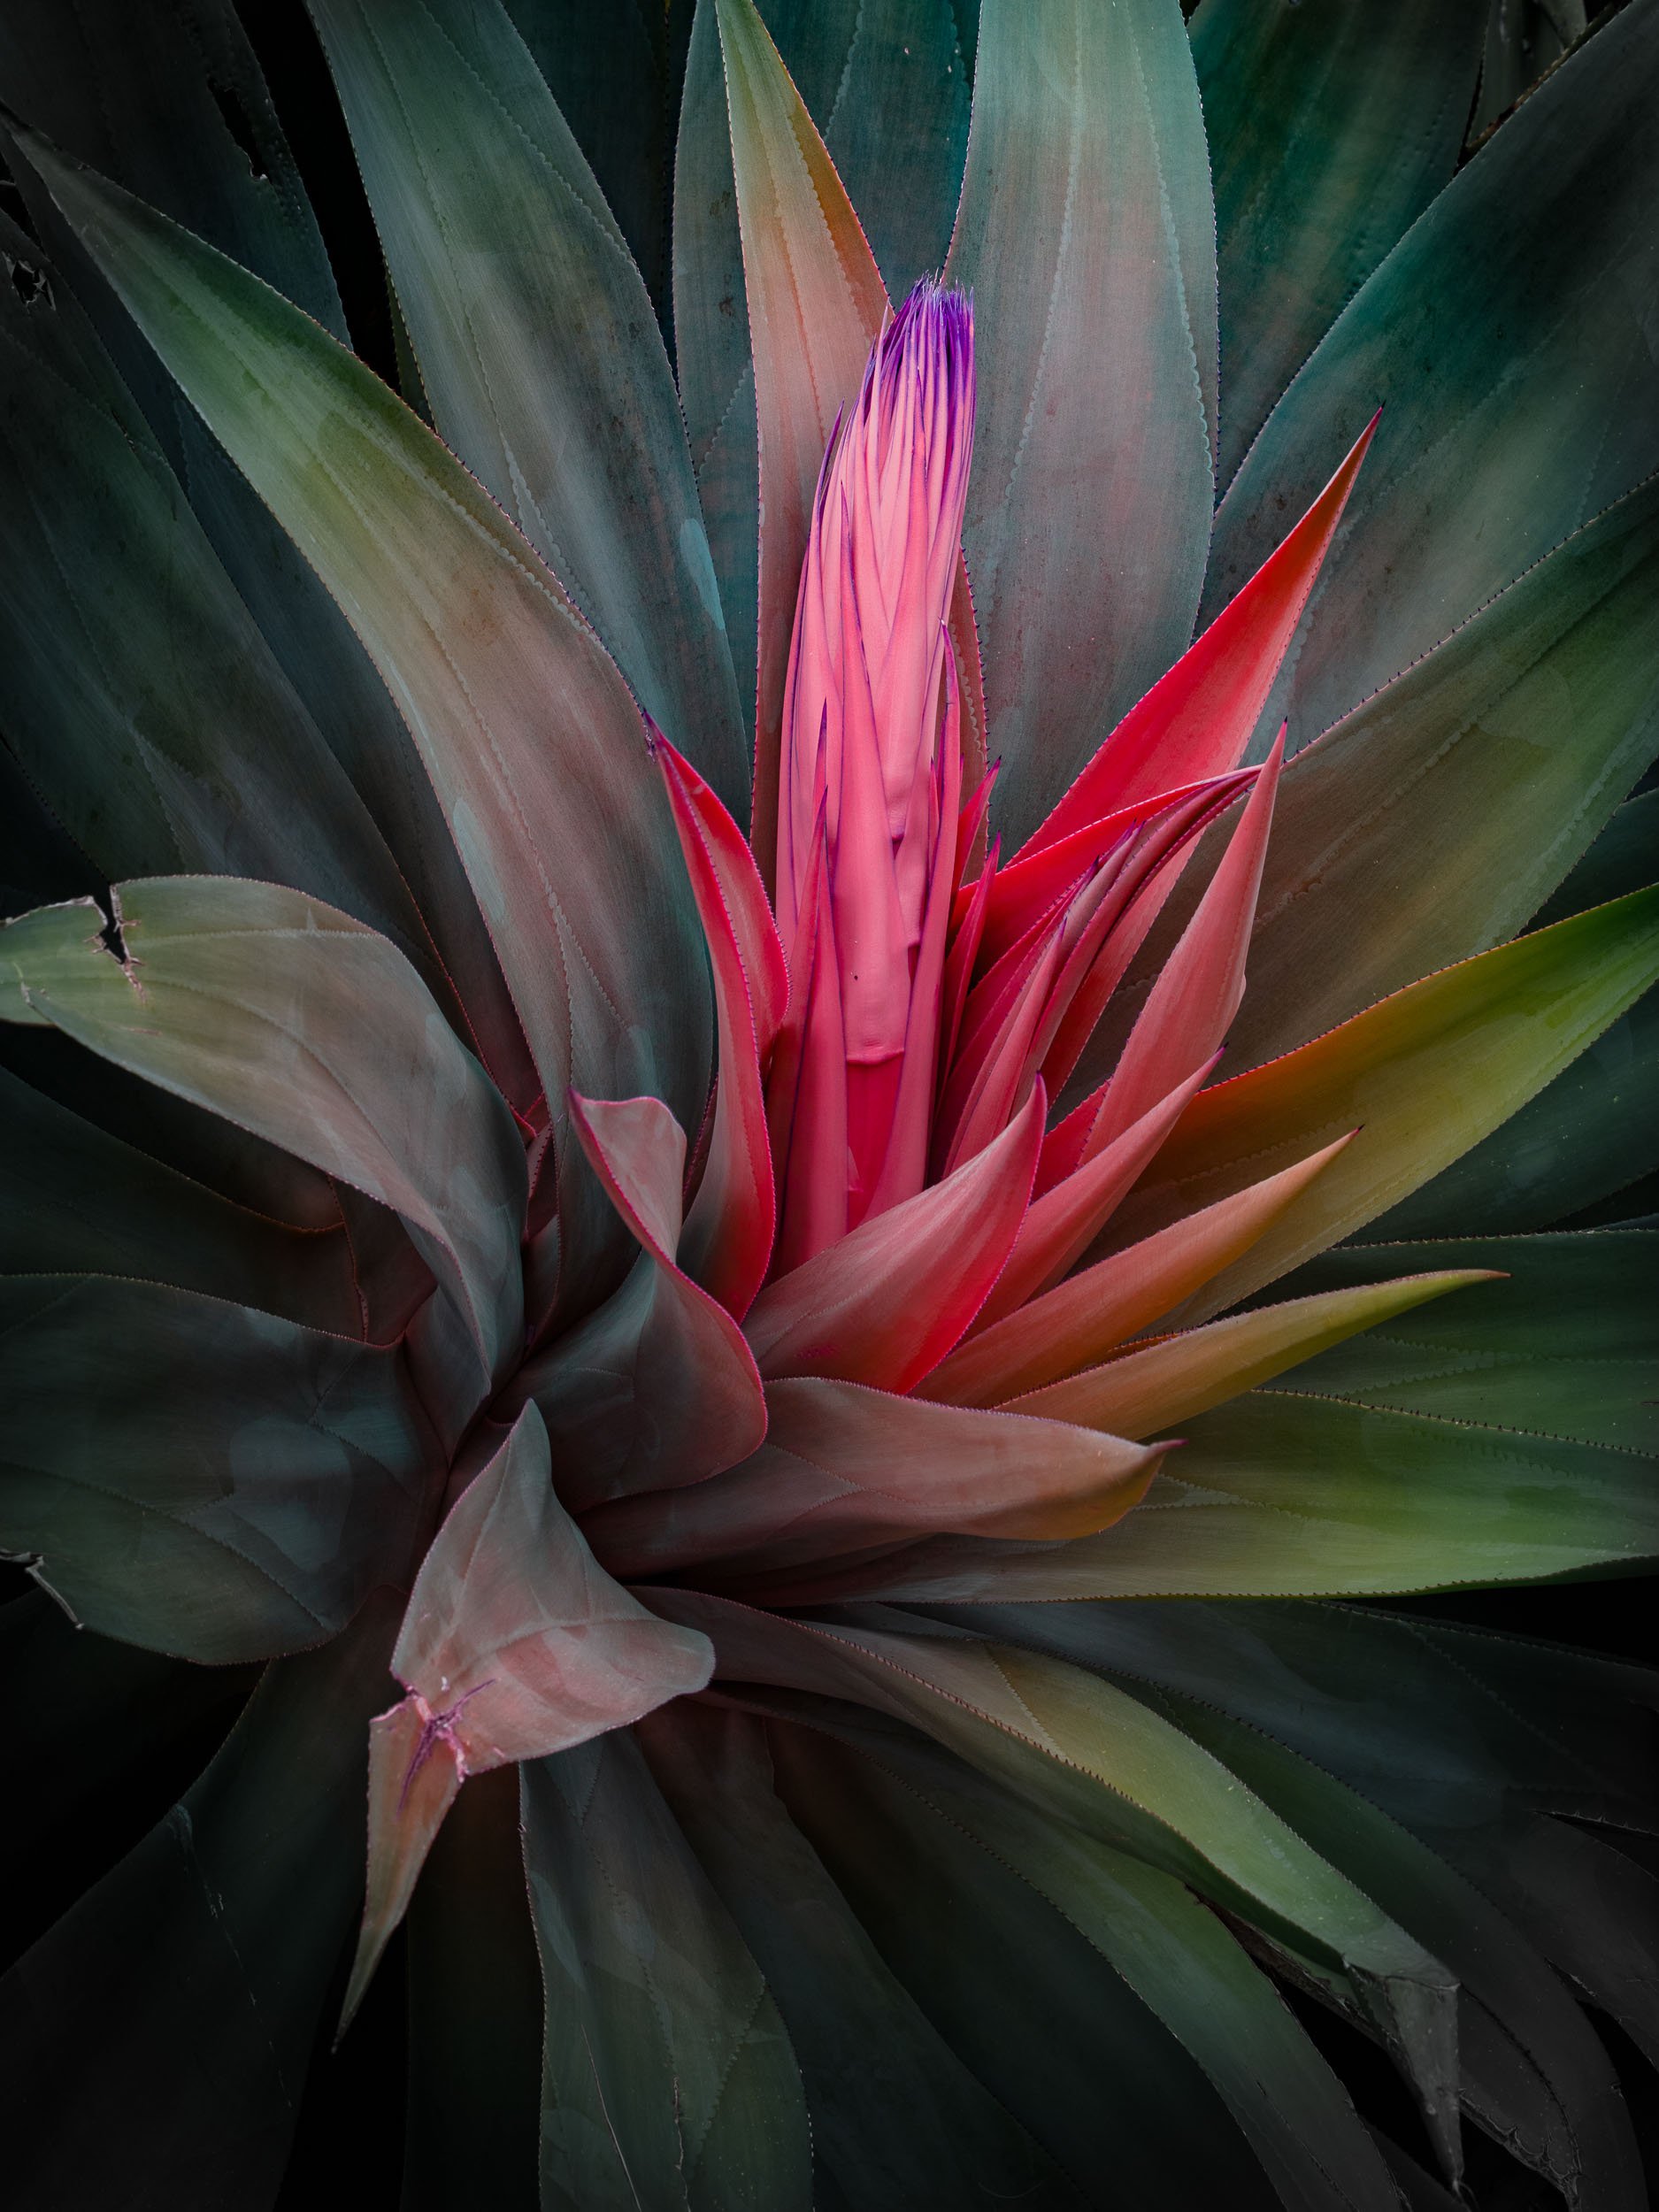 tom-leighton-artist-variegation-night-life-plants-photo-1-2.jpg